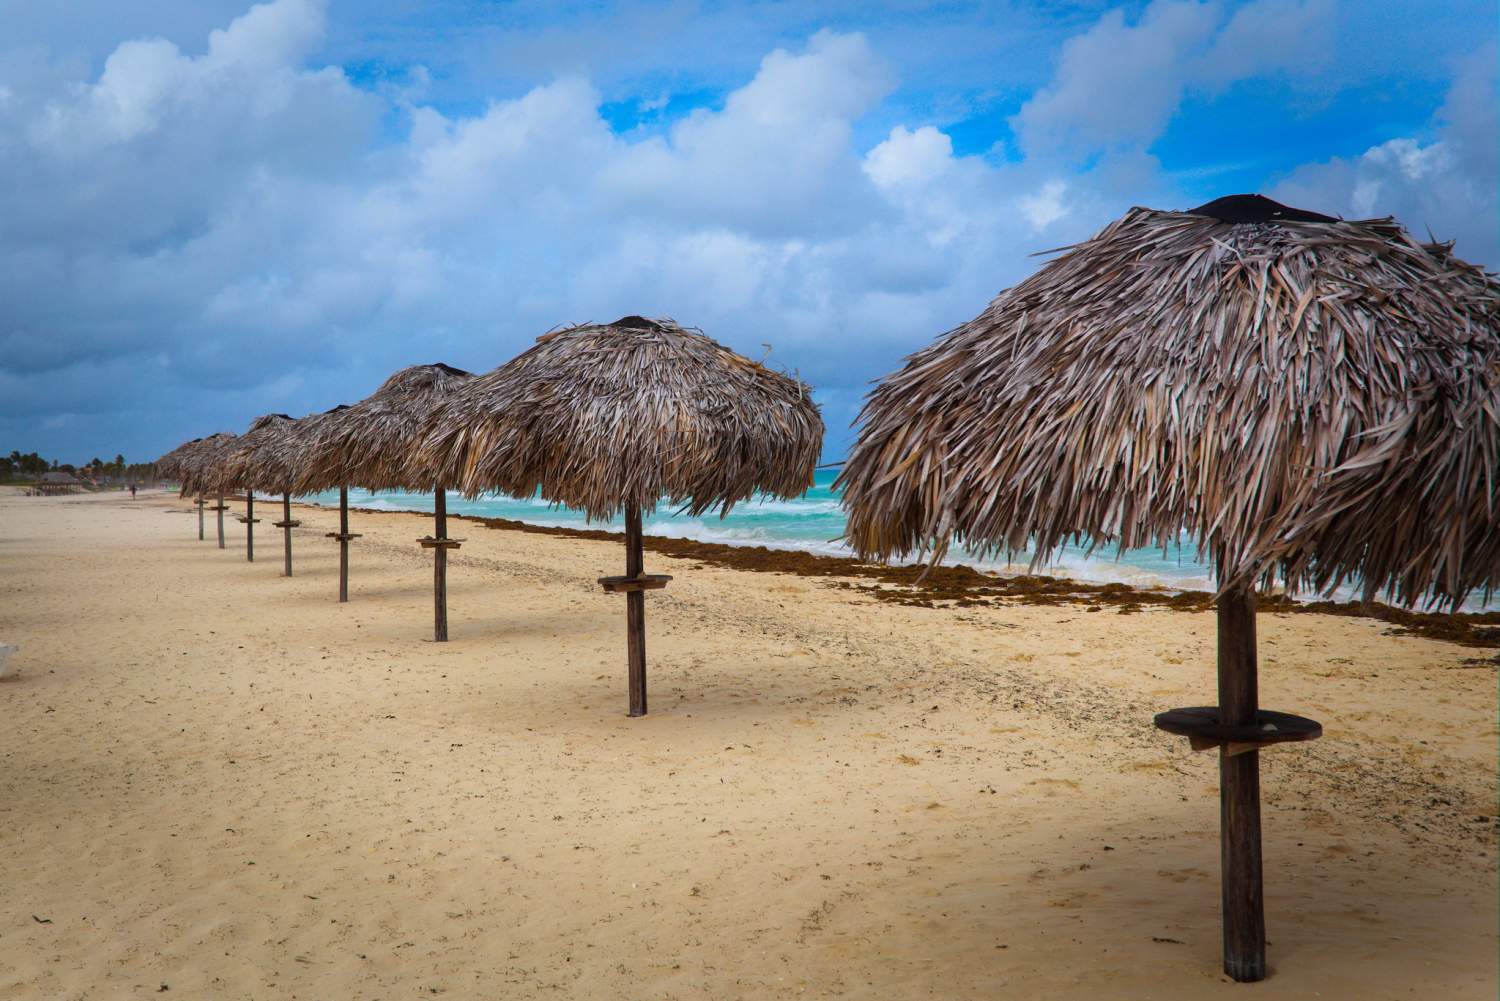 Cayo Coco beach, Cuba